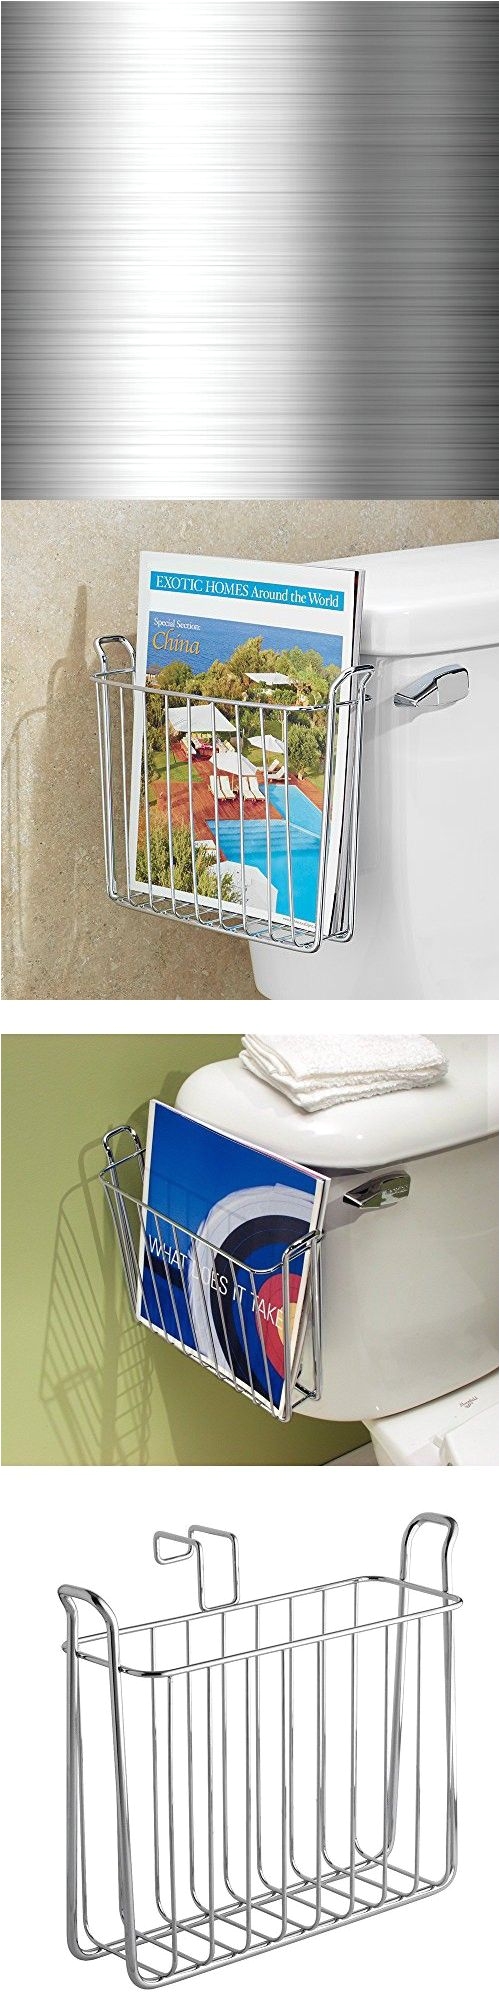 interdesign classico newspaper and magazine rack for bathroom storage over the tank chrome